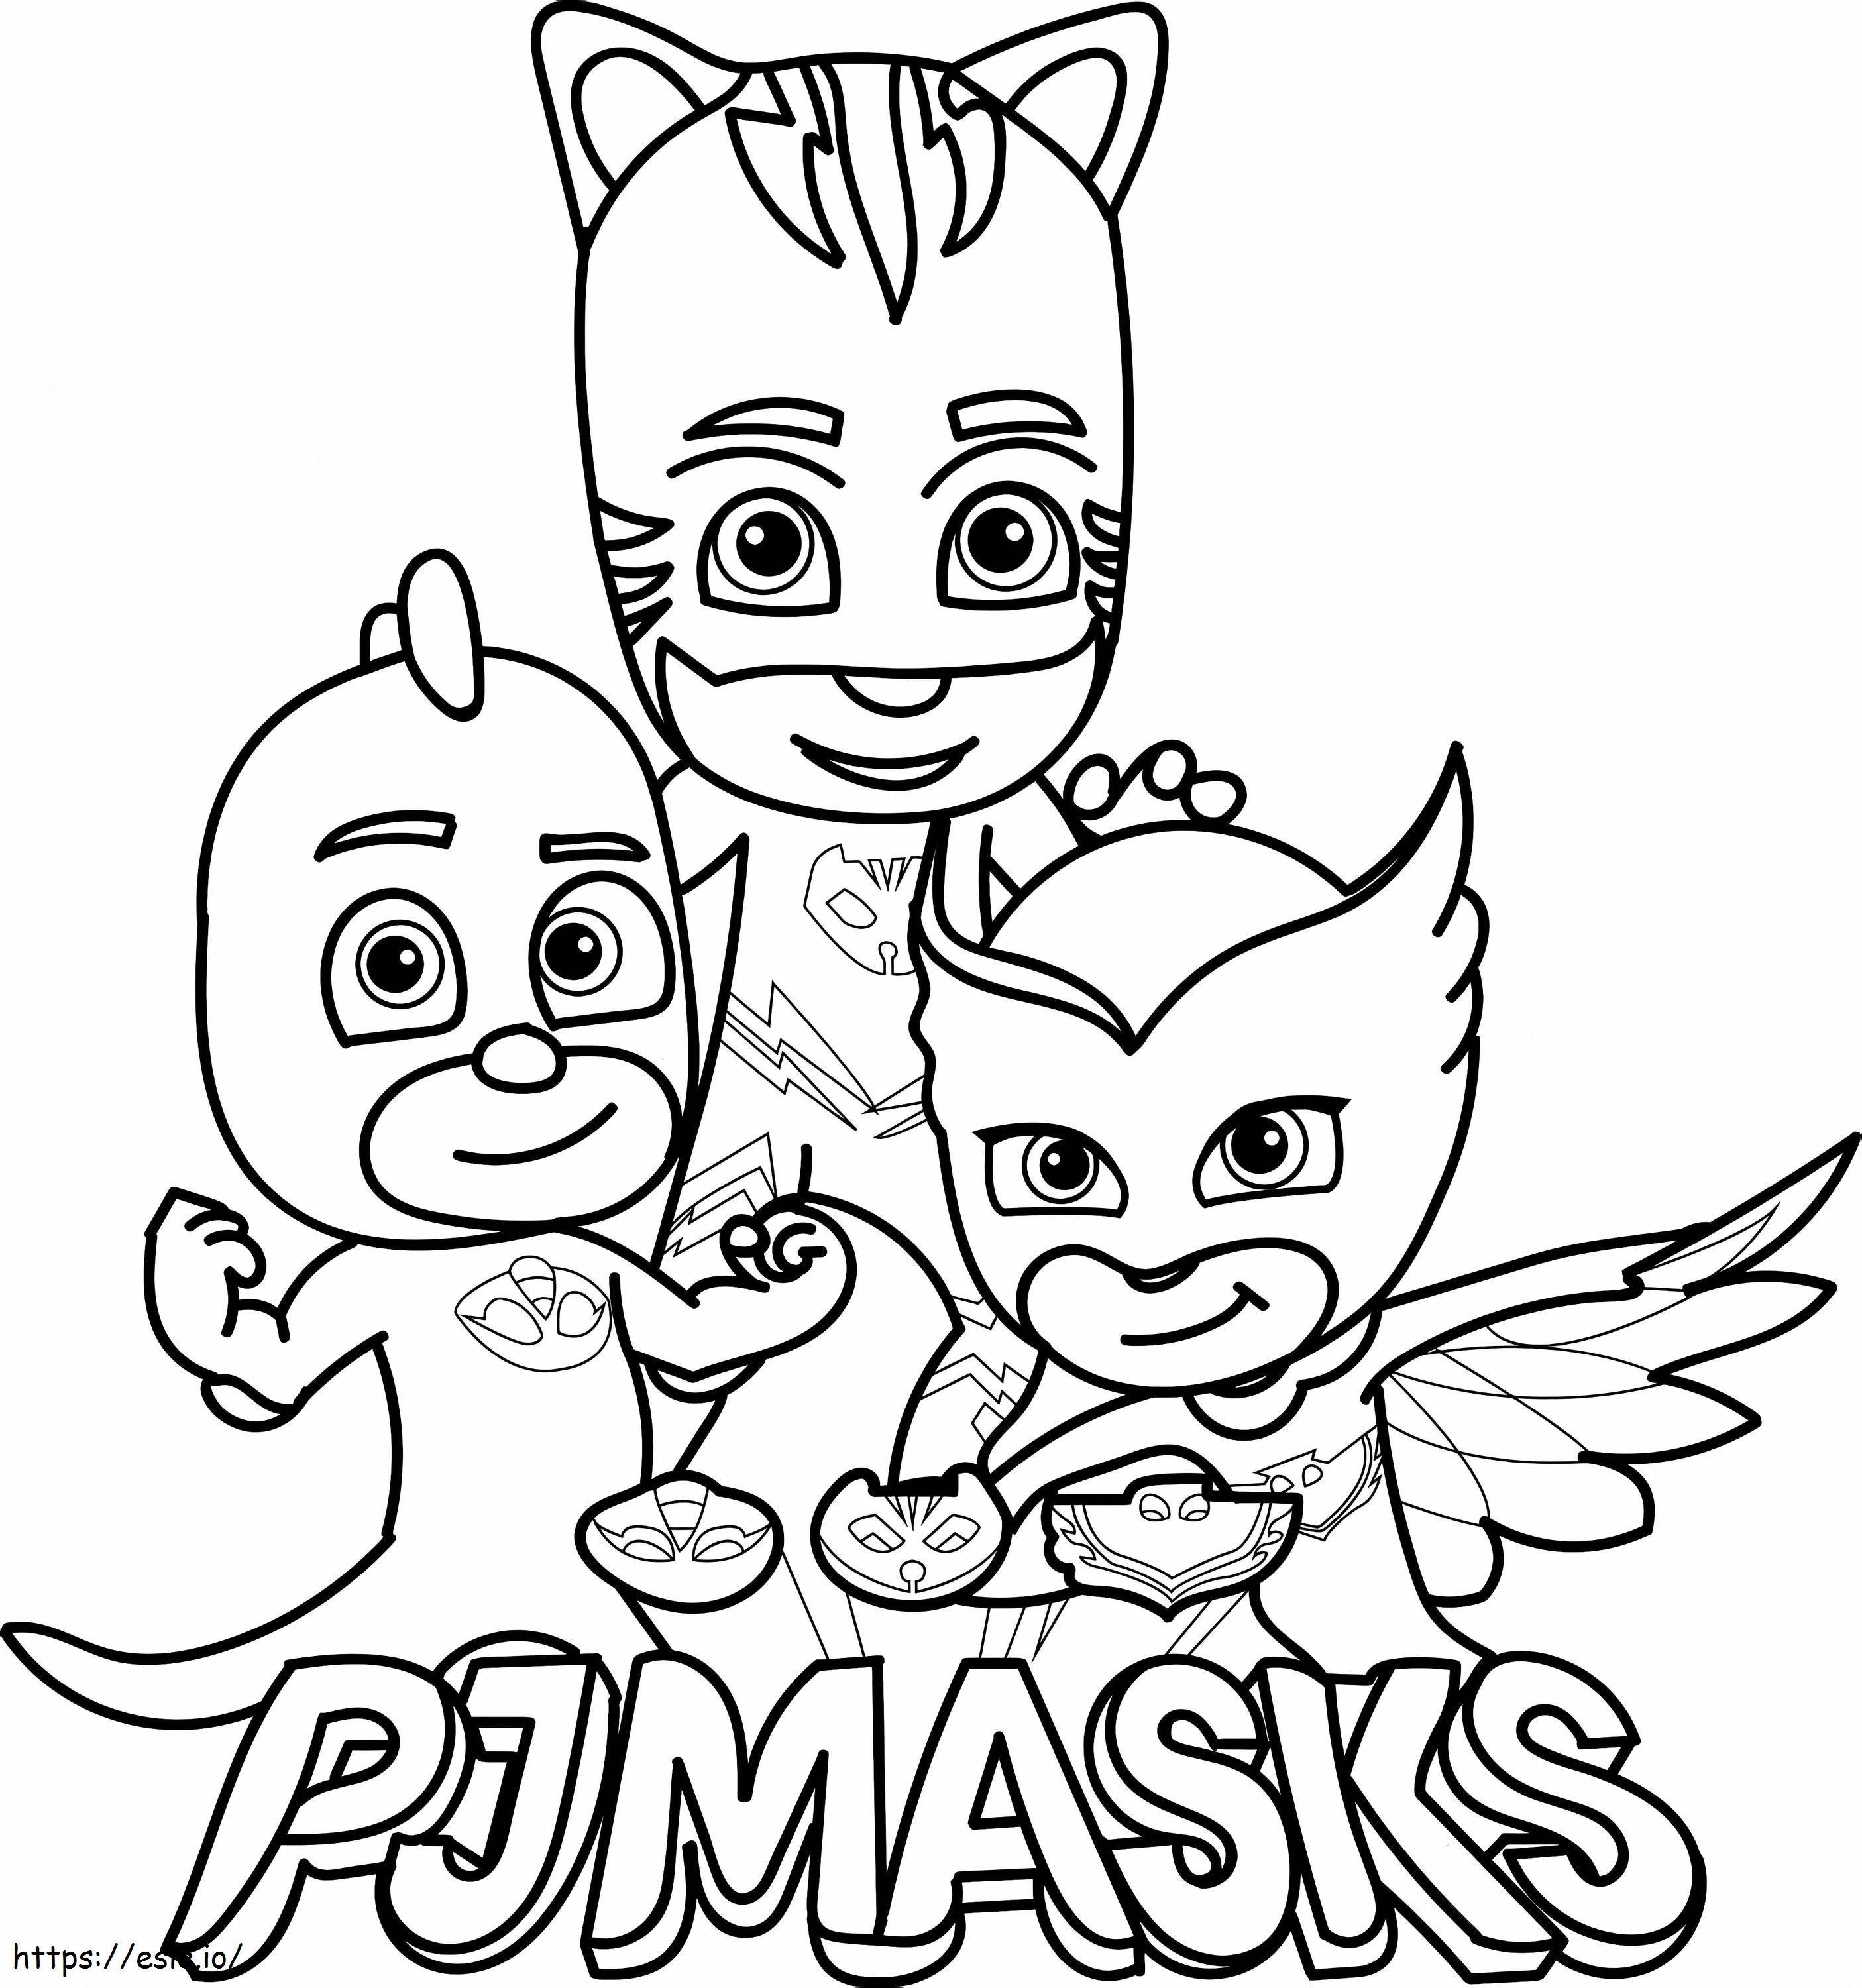 PJMASKS-team kleurplaat kleurplaat